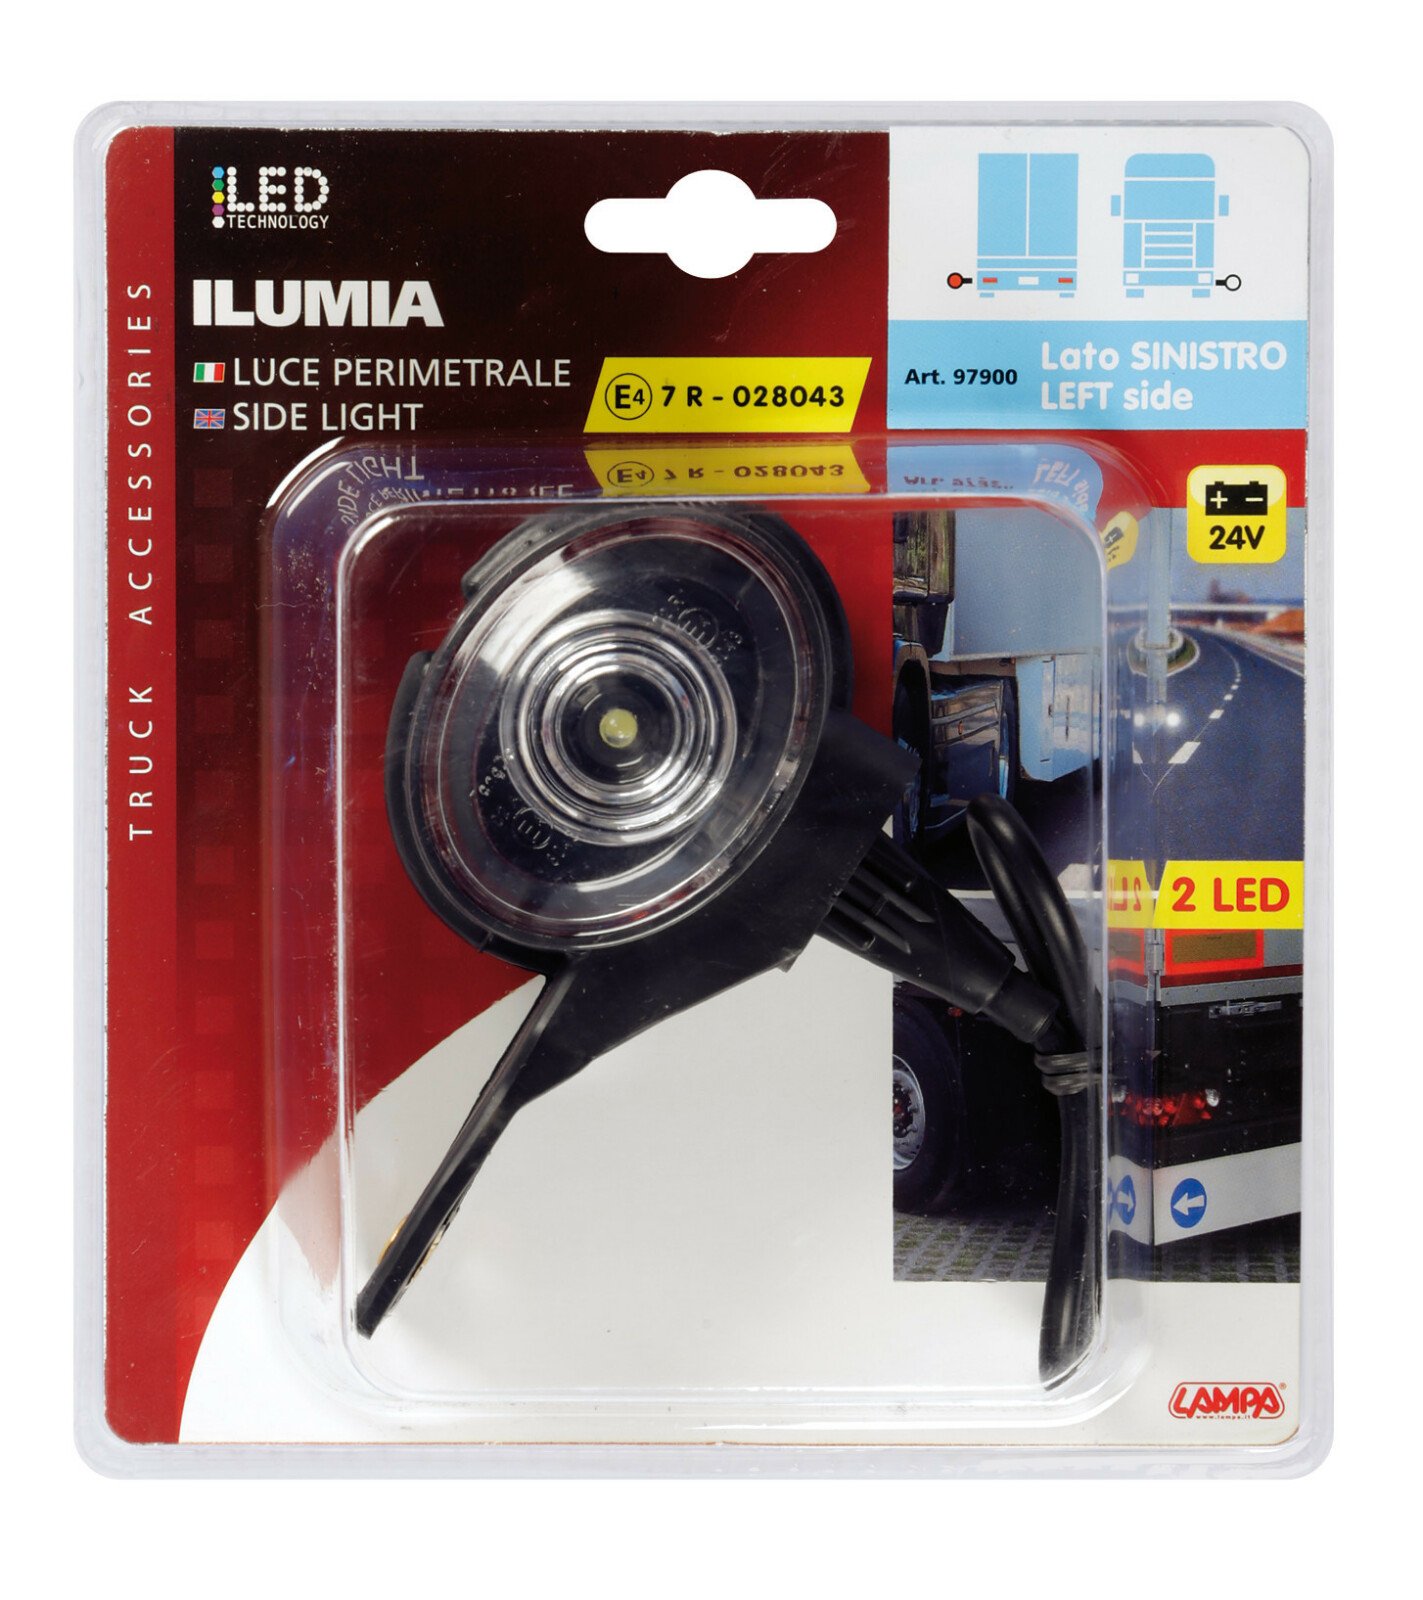 Ilumia, side light, 2 Led, 24V - Left thumb